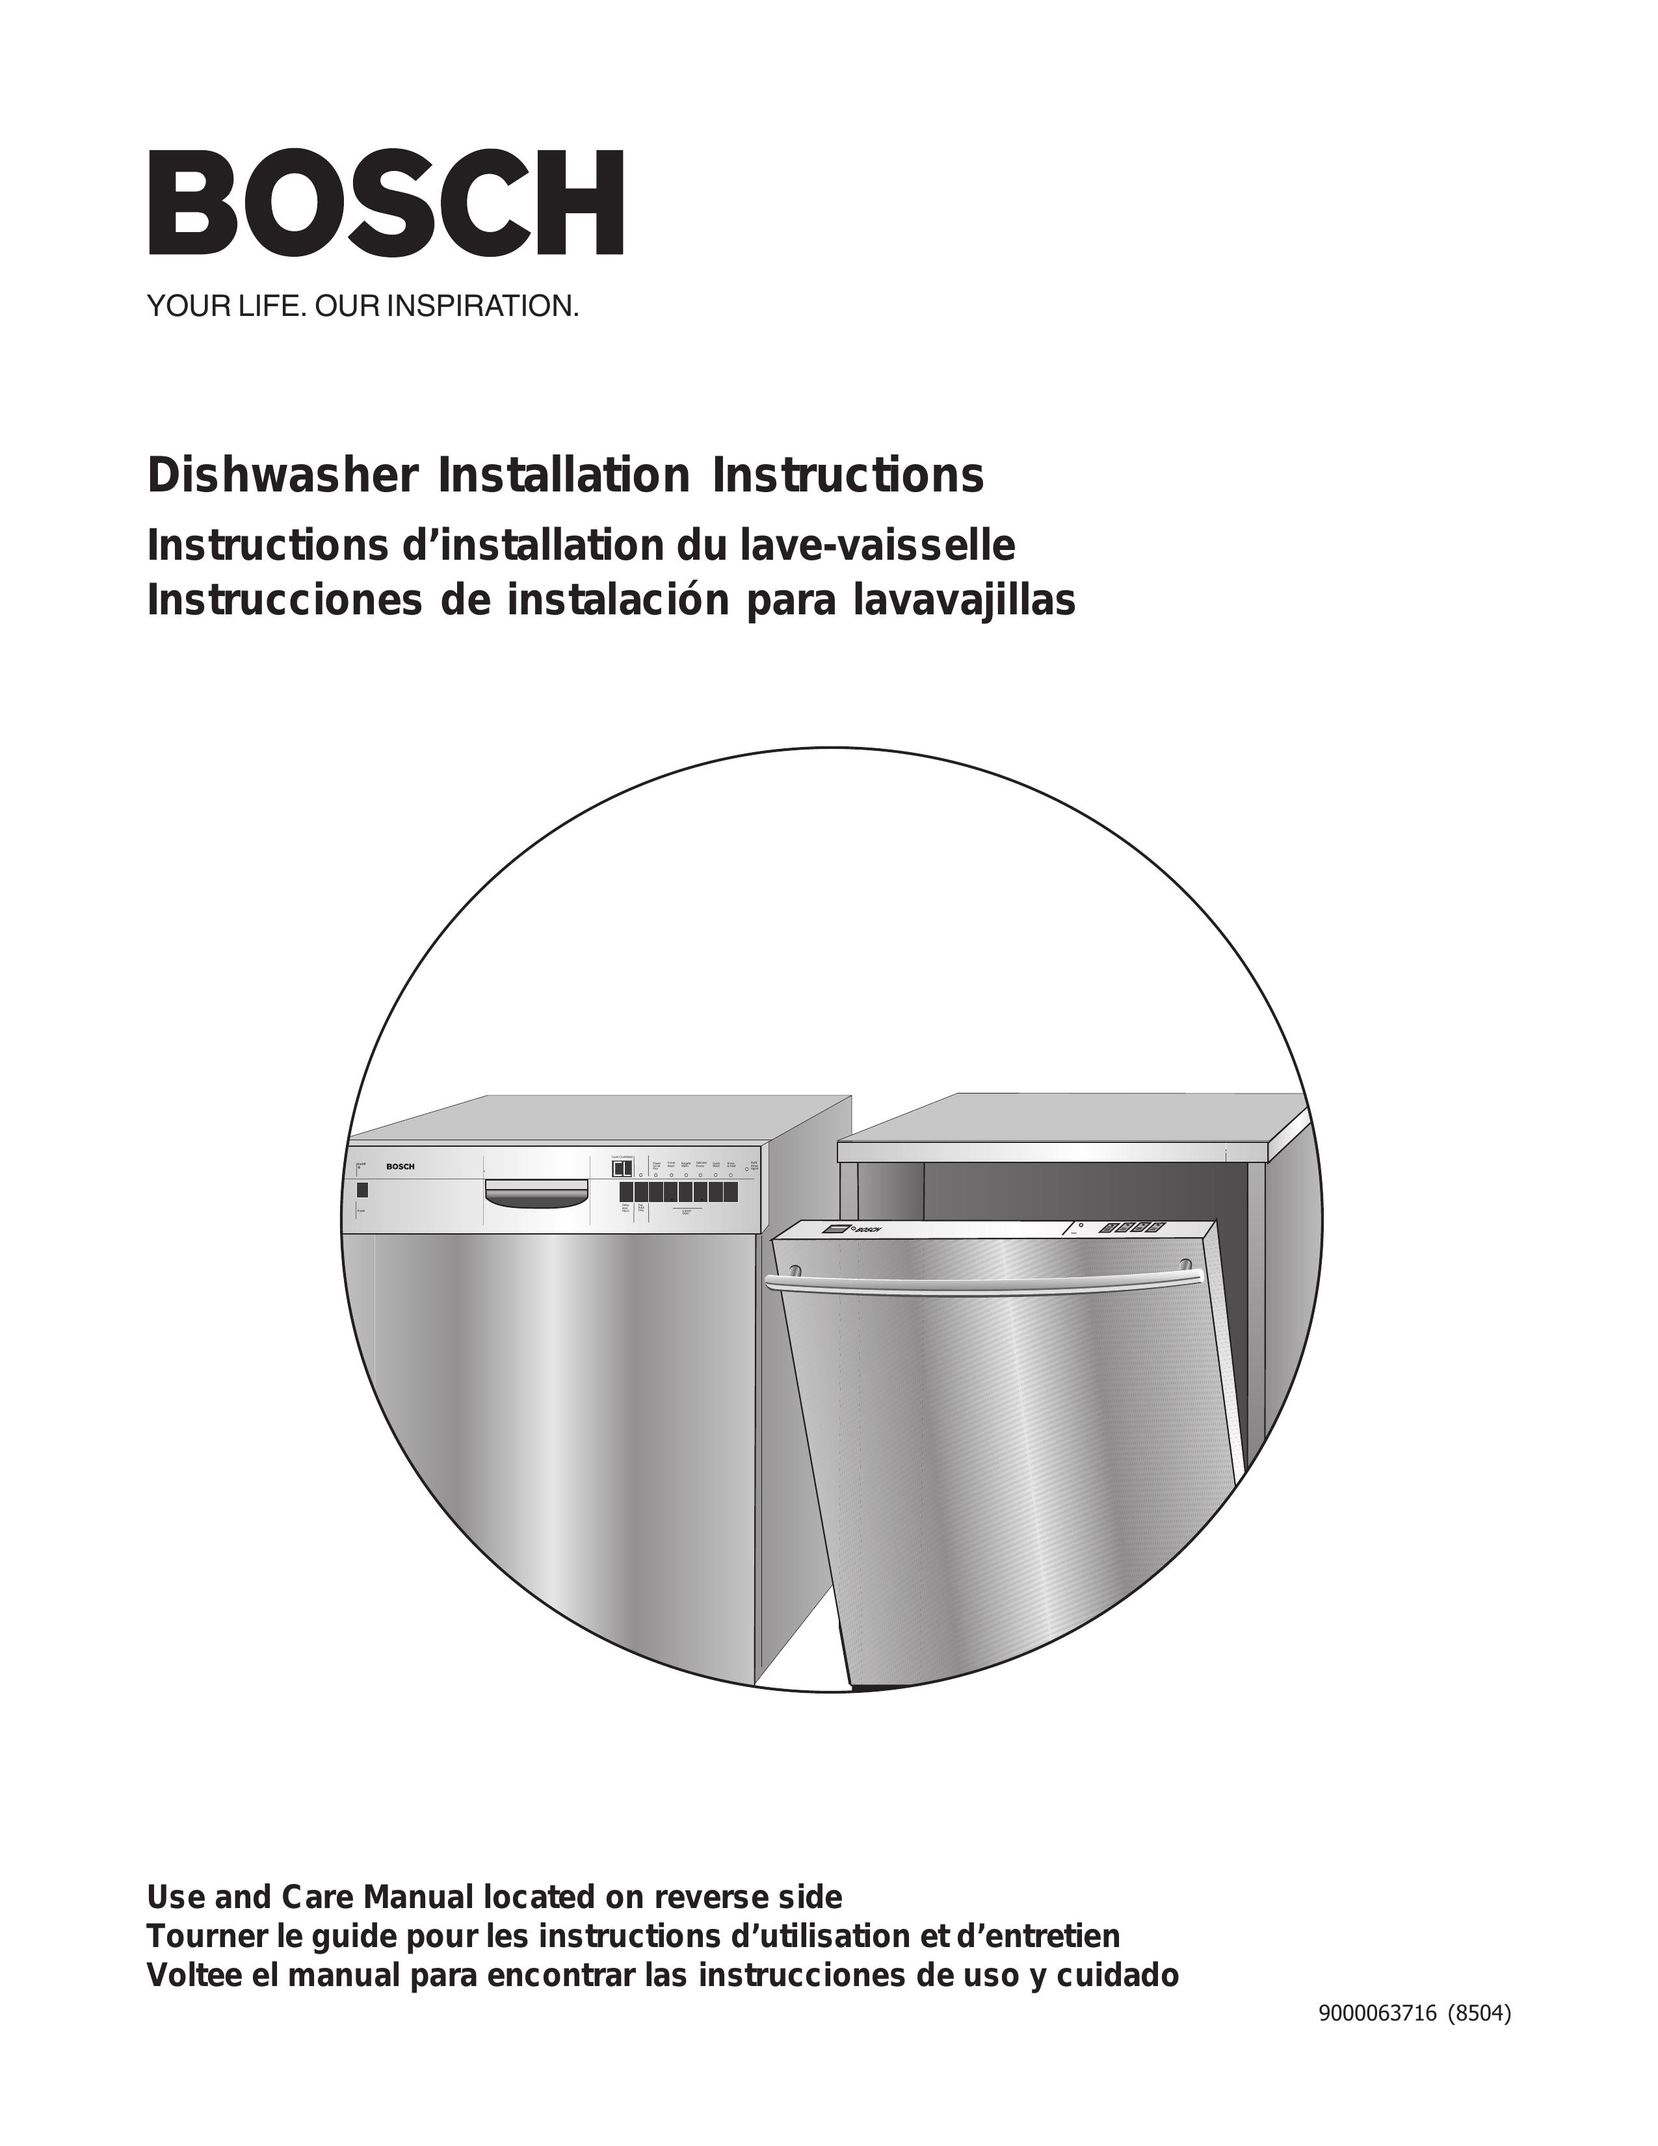 Bosch Appliances 9000063716 (8504) Dishwasher User Manual